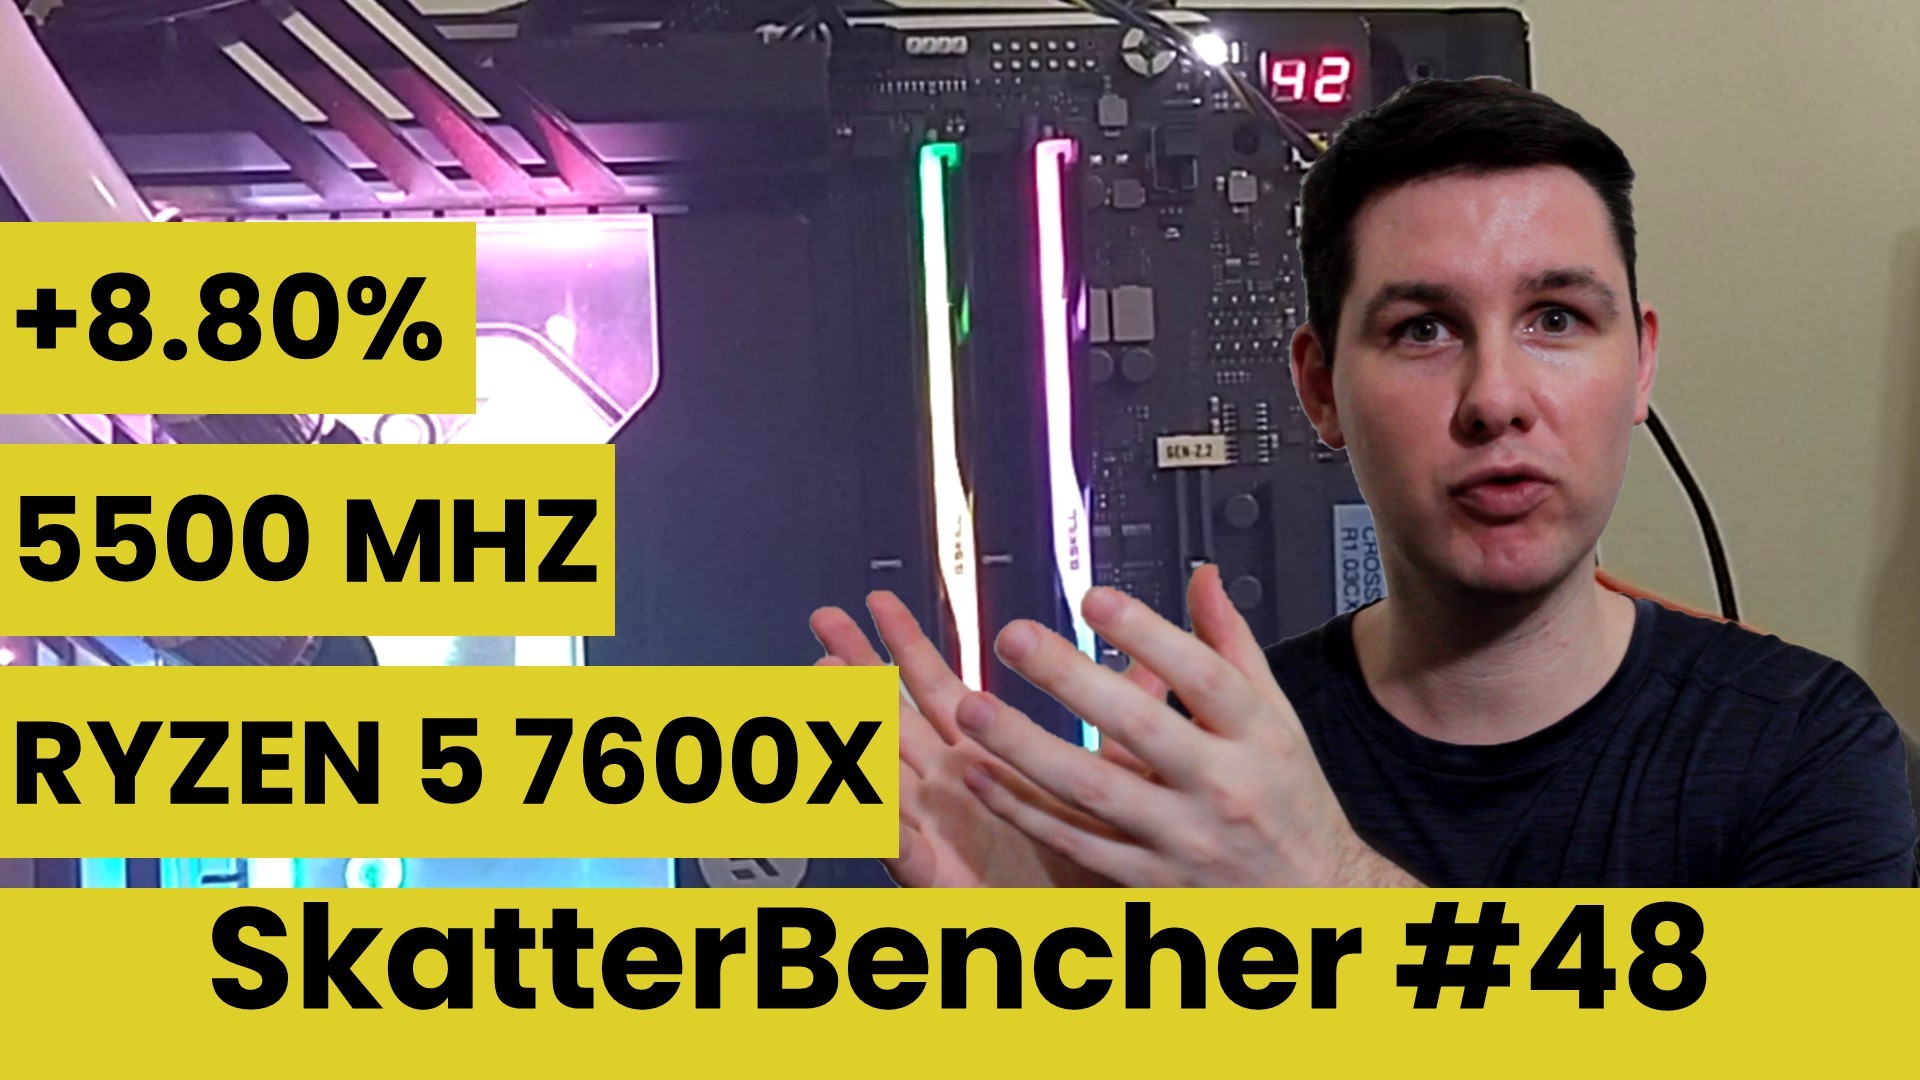 SkatterBencher #48: AMD Ryzen 5 7600X Overclocked to 5544 MHz -  SkatterBencher